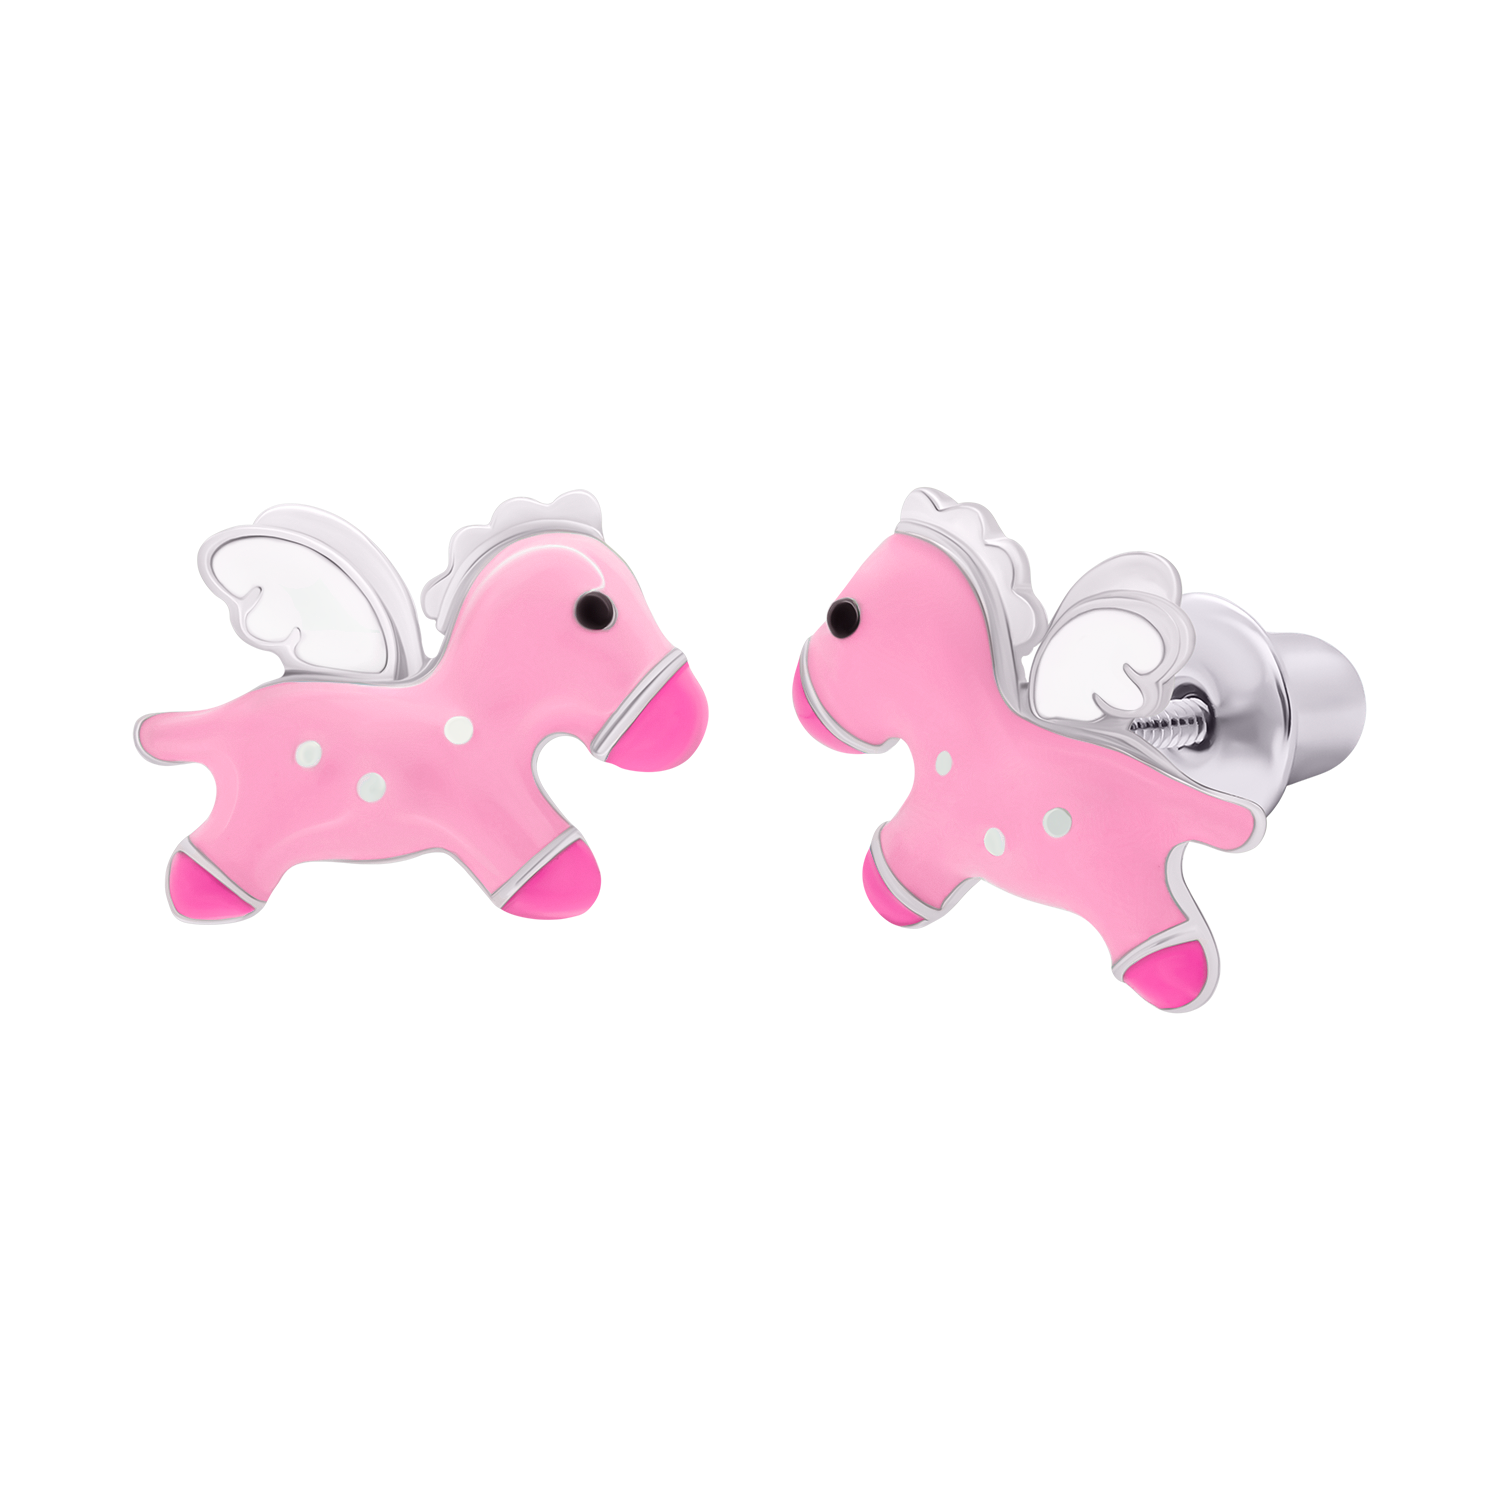 Stud earrings Pegasus with pink and white enamel